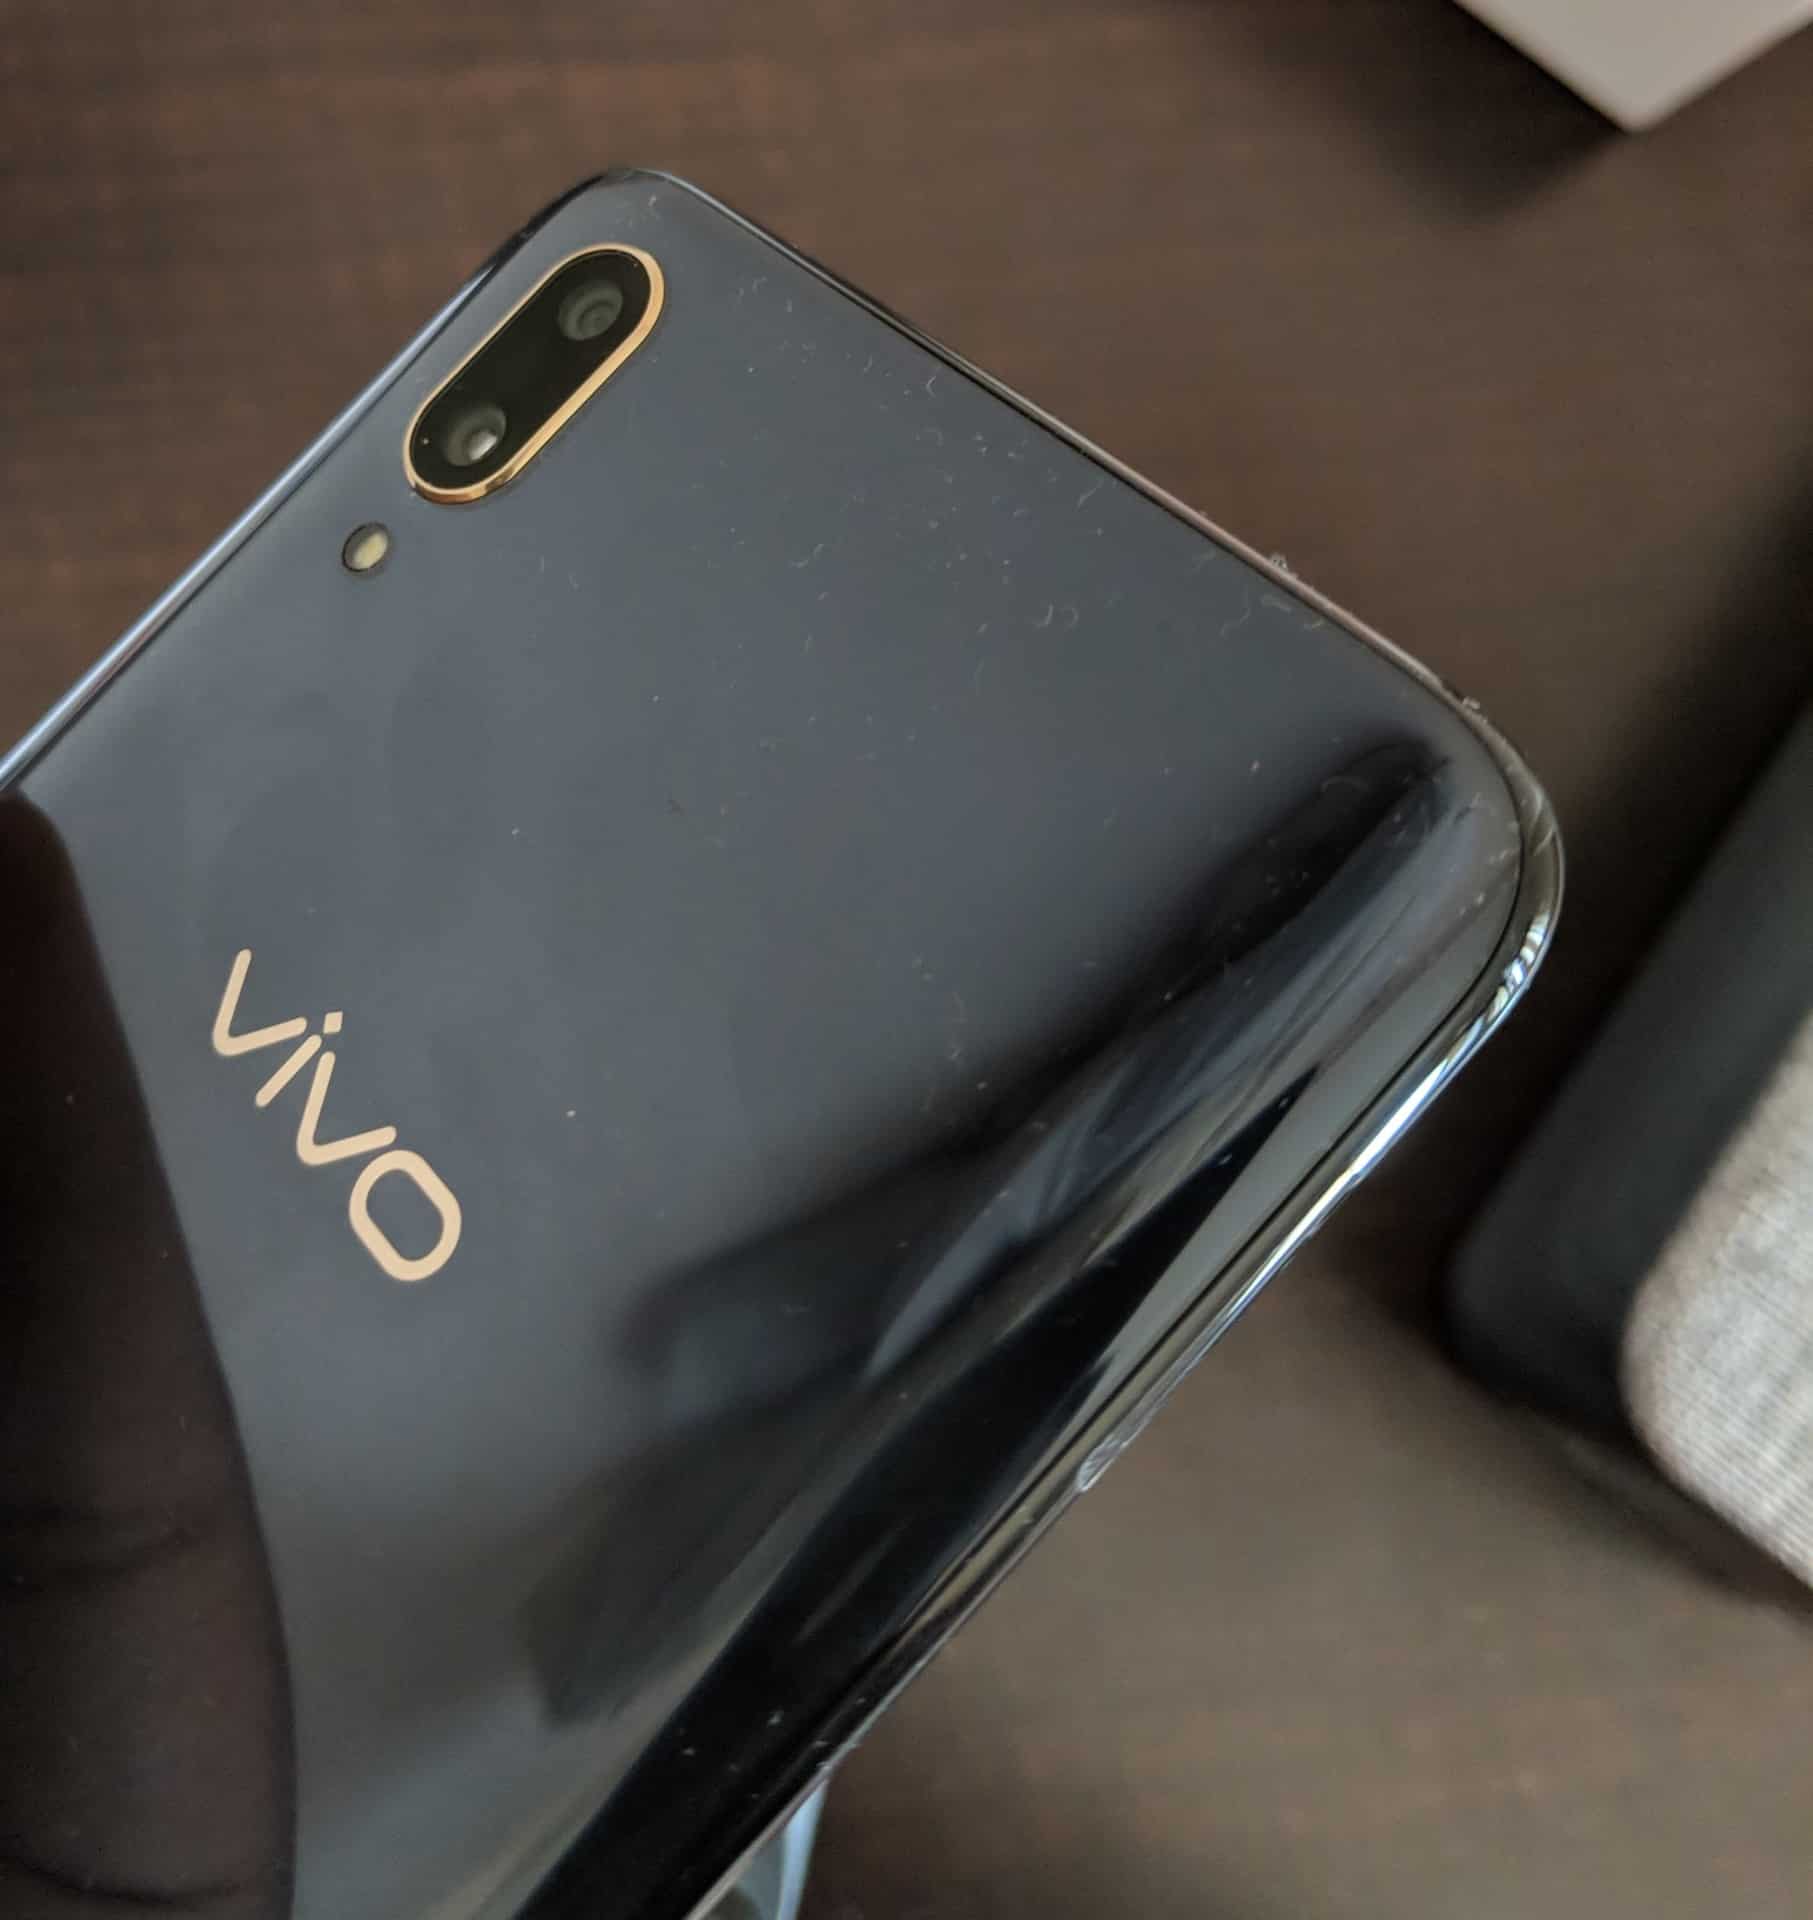 Vivo V11 Pro Review: Best Mid-Range Smartphone? - 9